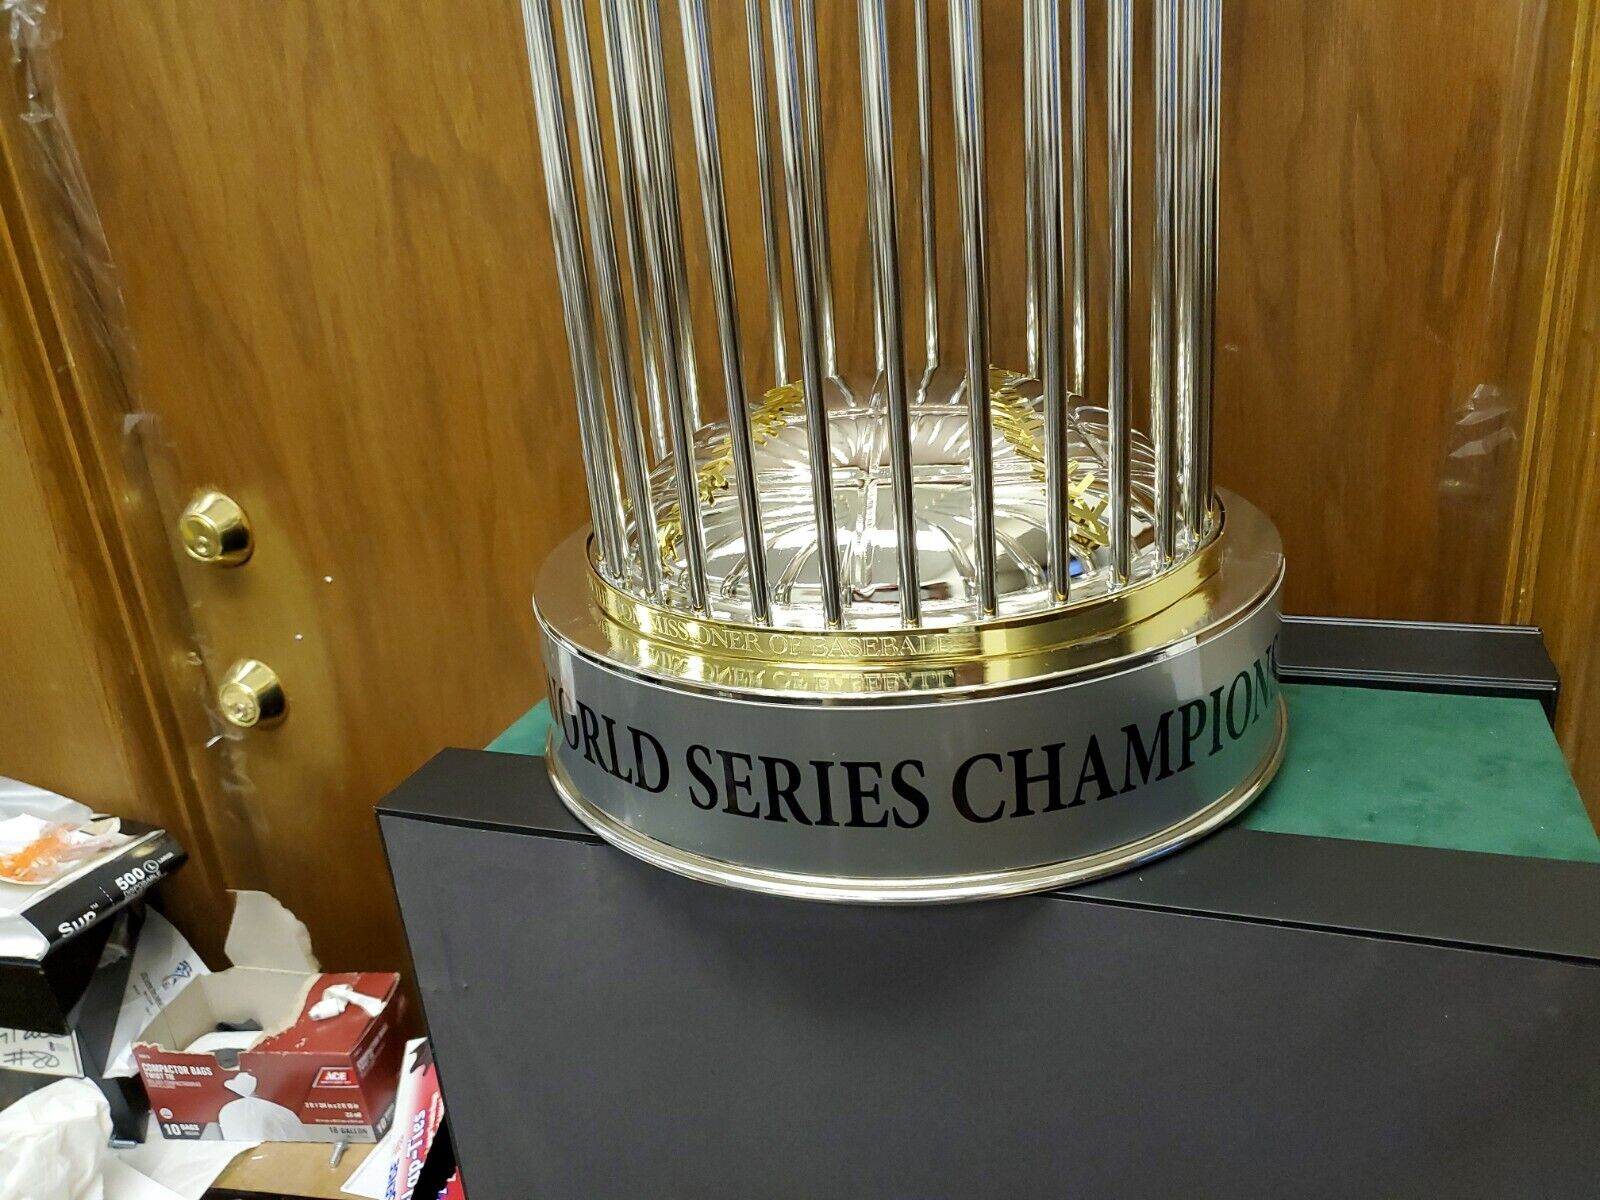 Atlanta Braves 2021 World Series Champions Replica Trophy FOCO